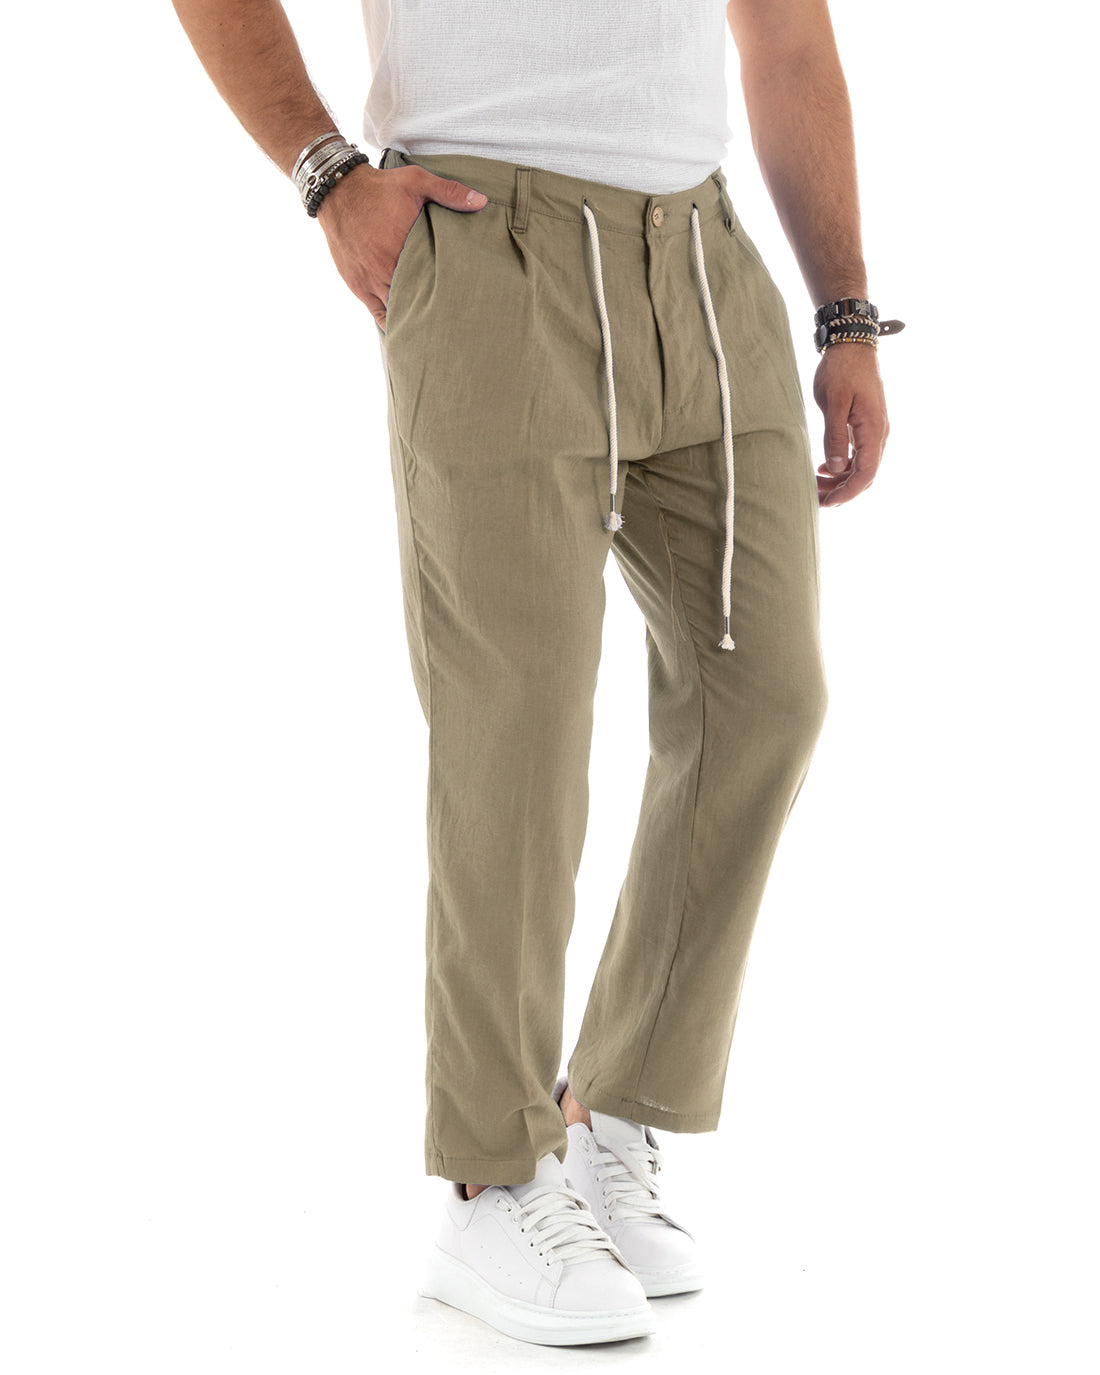 Pantaloni Uomo Lino Tasca America Basic Con Coulisse Elastico Sul Retro Casual Tinta Unita Fango GIOSAL-P6103A